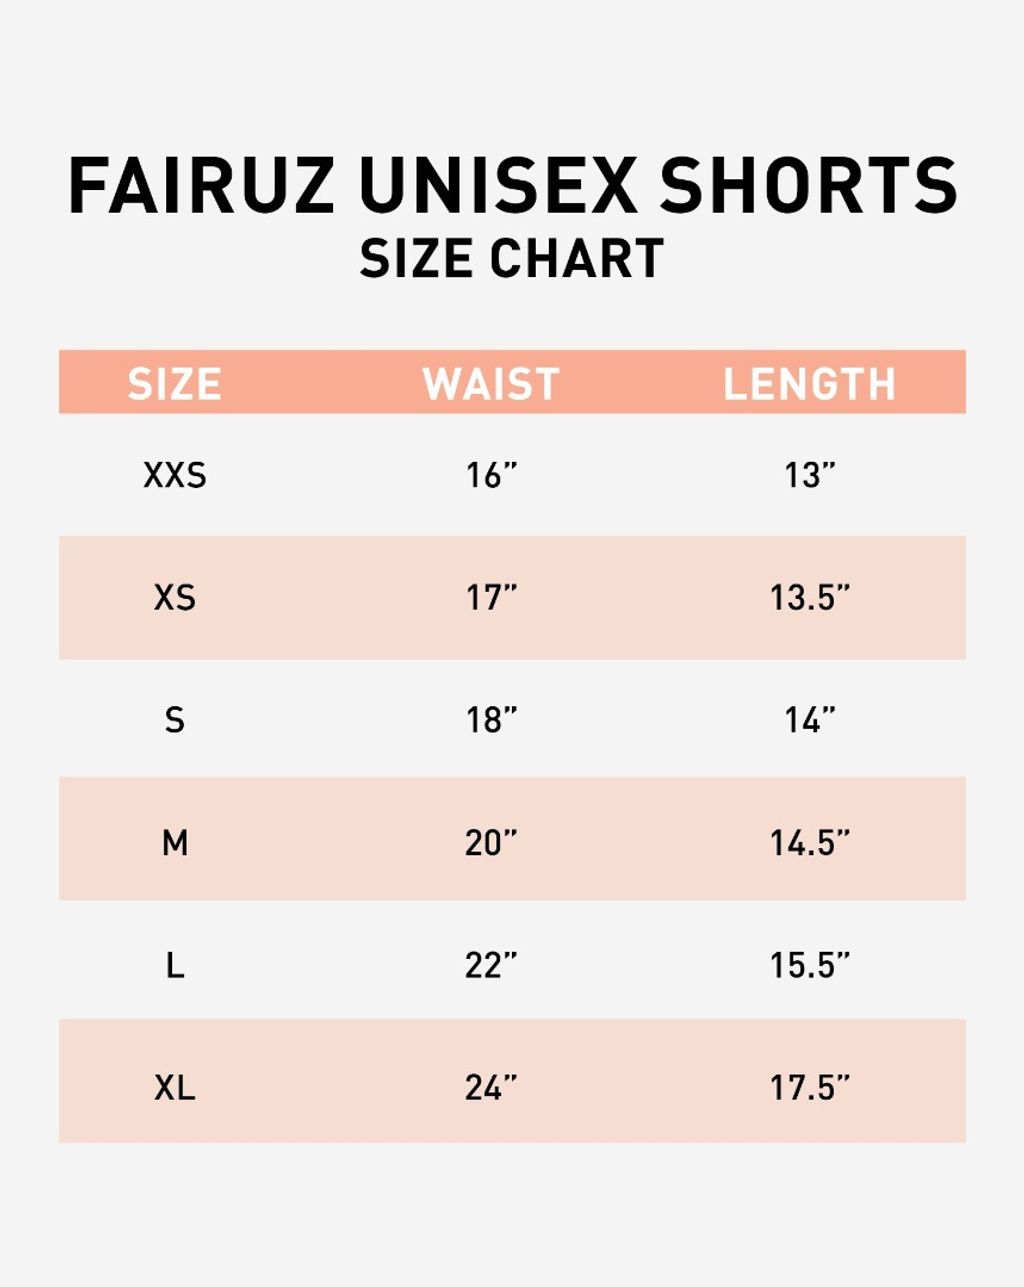 Fairuz Unisex Shorts.jpeg